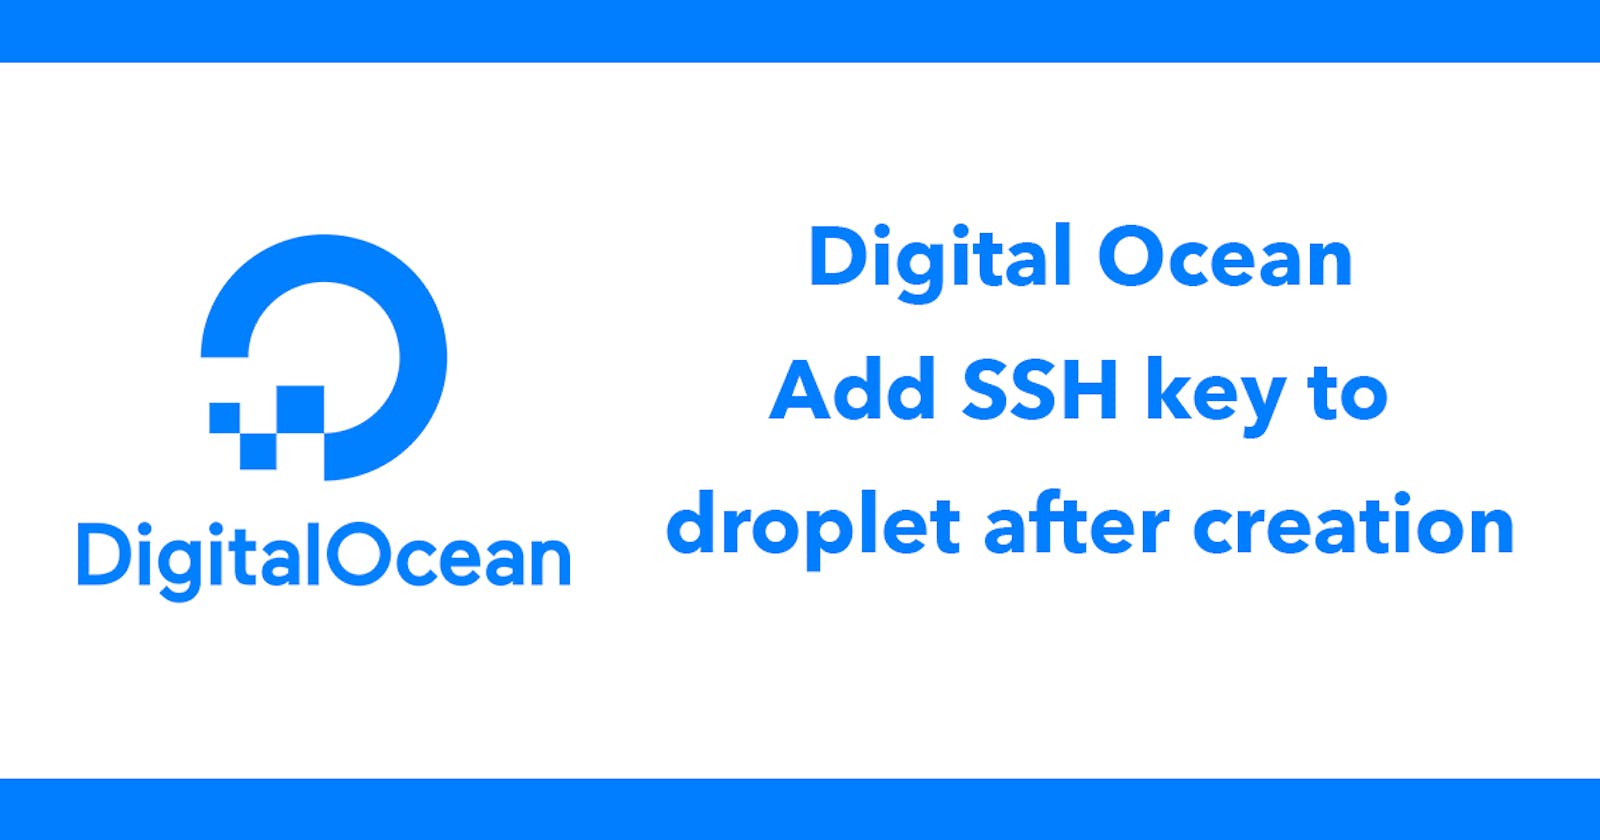 Digital Ocean - Add SSH key to droplet after creation